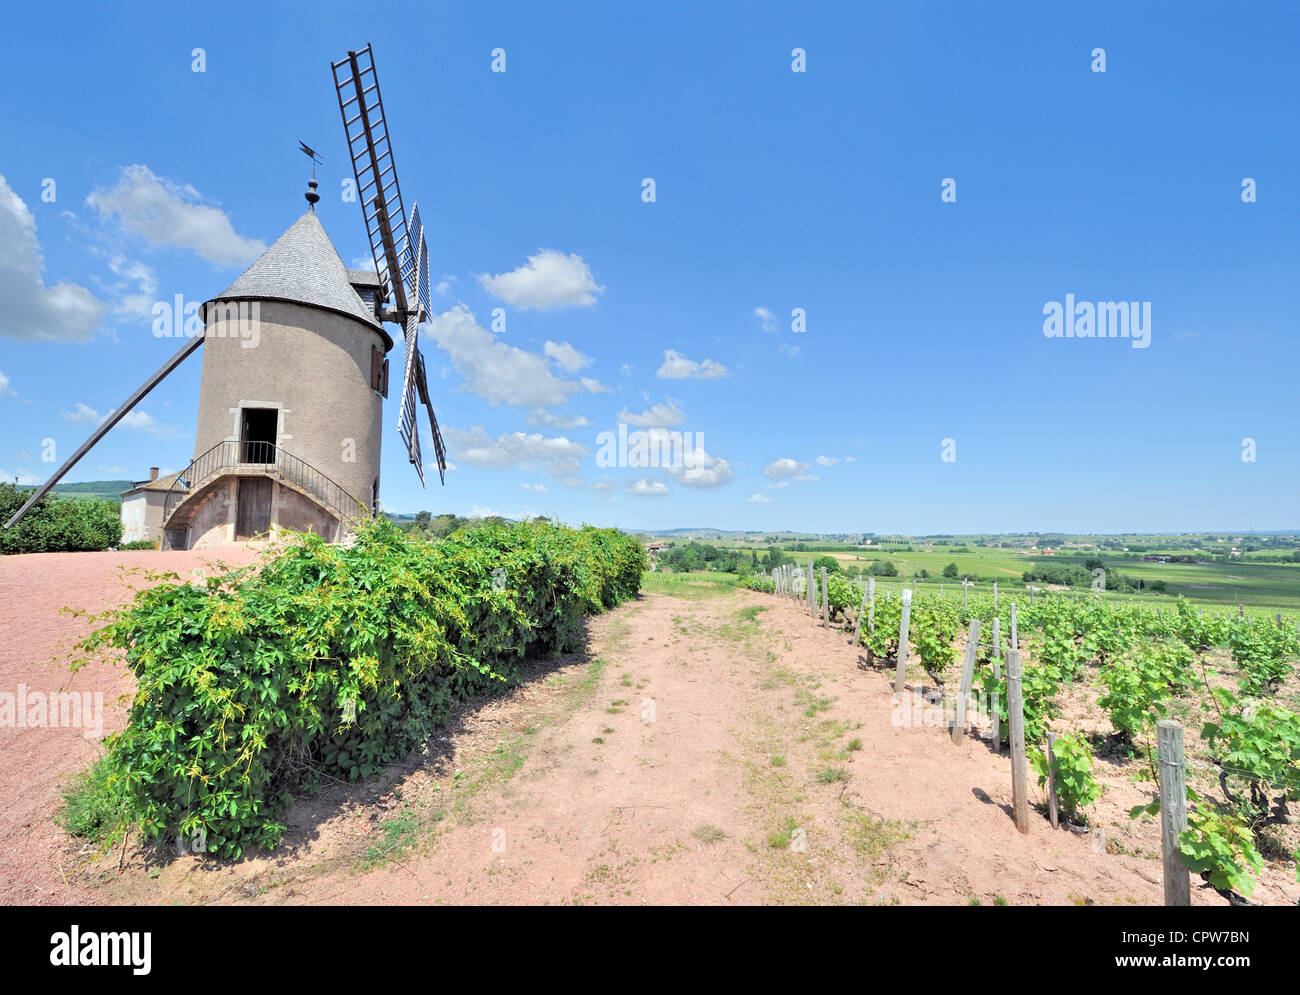 Windmill among vineyards in Beaujolais region, France Stock Photo